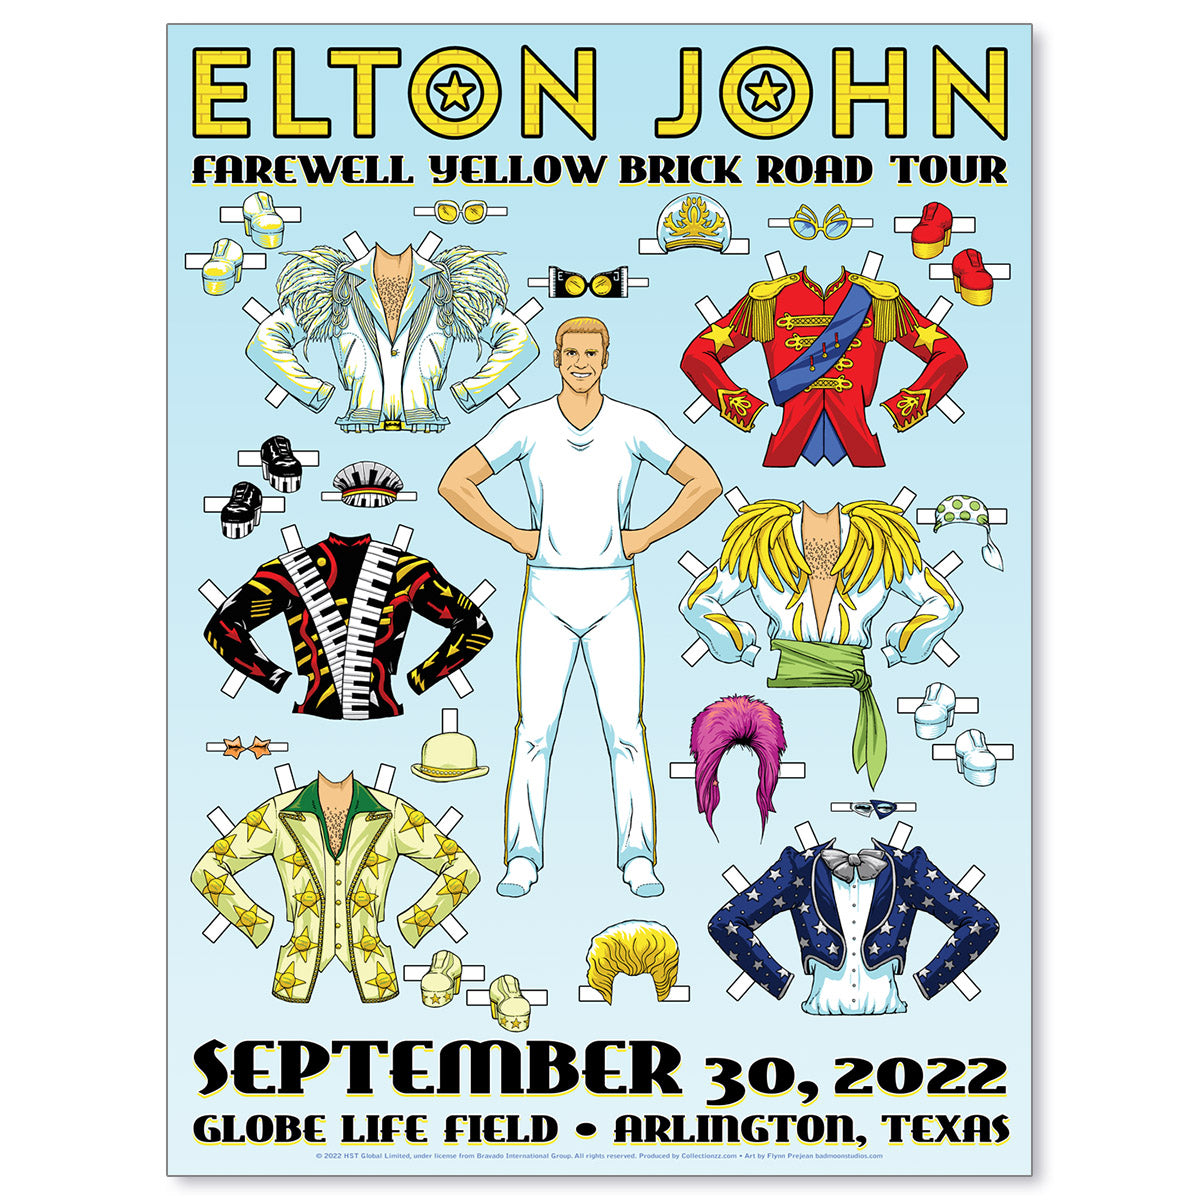 Elton John Arlington Farewell Yellow Brick Road Tour